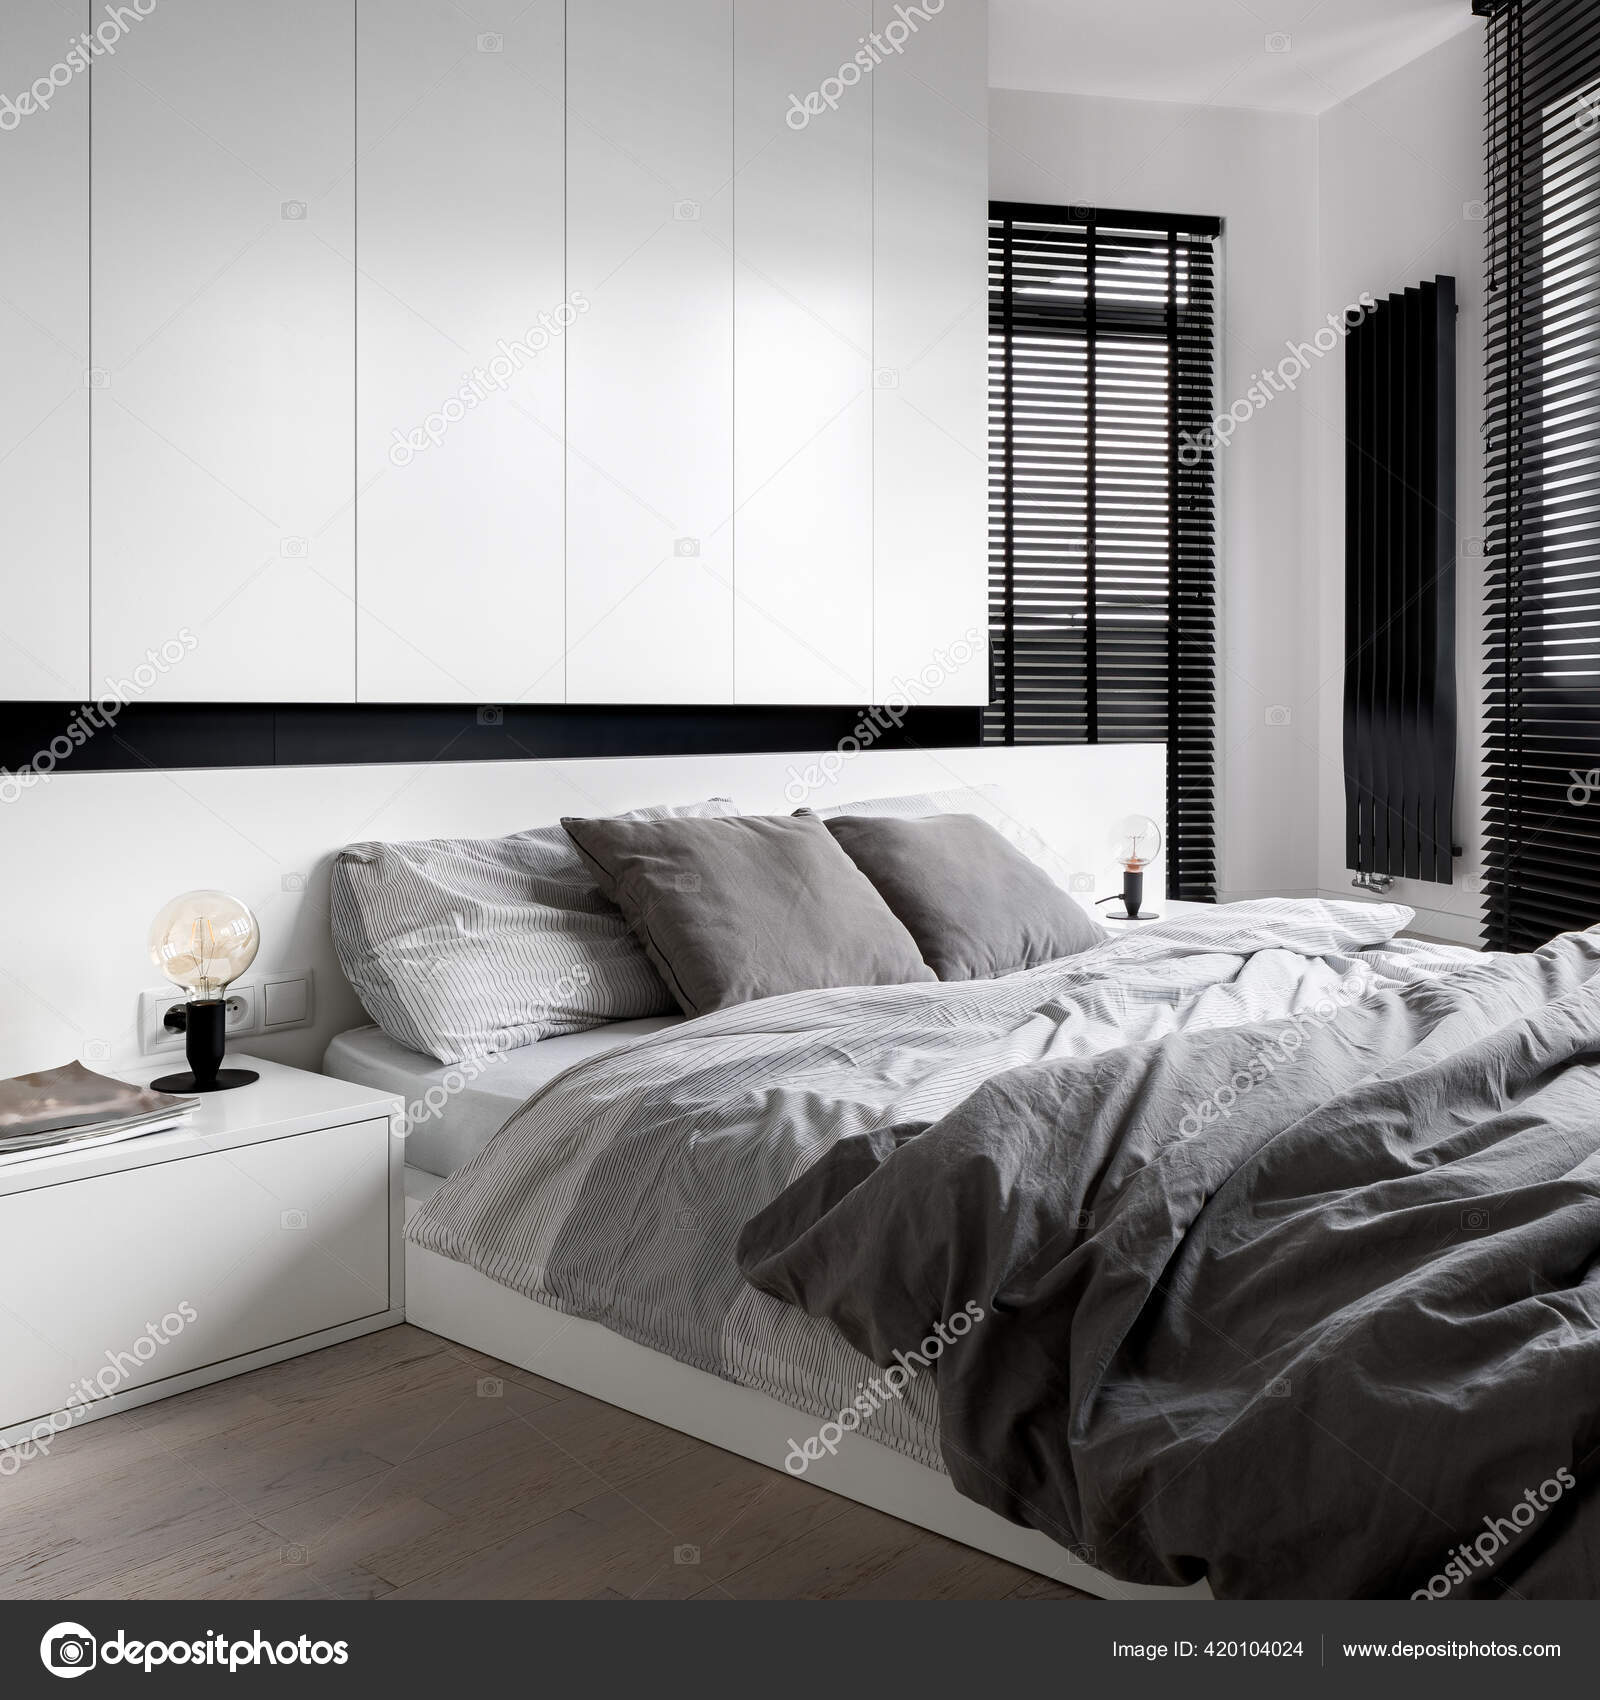 https://st2.depositphotos.com/6297298/42010/i/1600/depositphotos_420104024-stock-photo-designed-bedroom-white-wardrobe-bedside.jpg